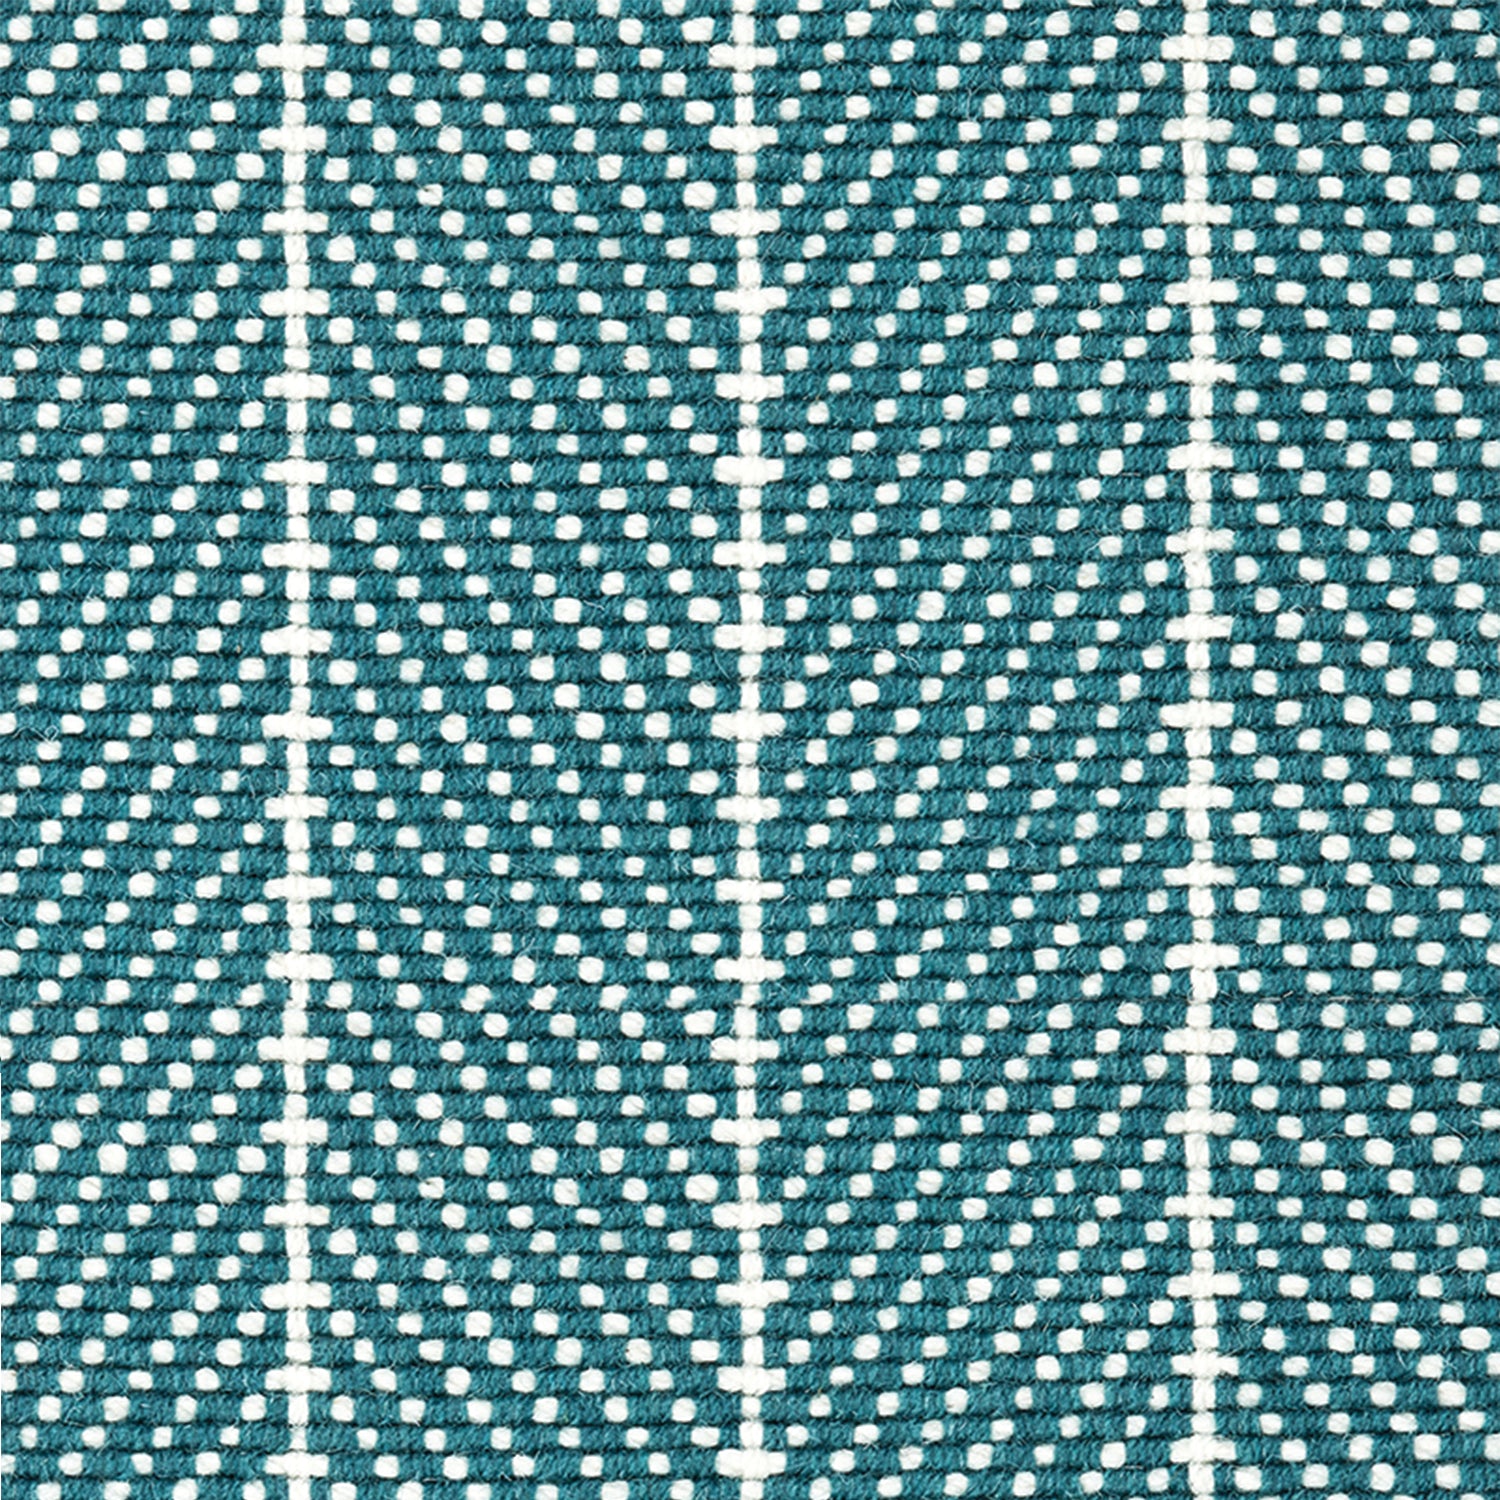 Wool broadloom carpet swatch in a herringbone stripe in cyan and cream.